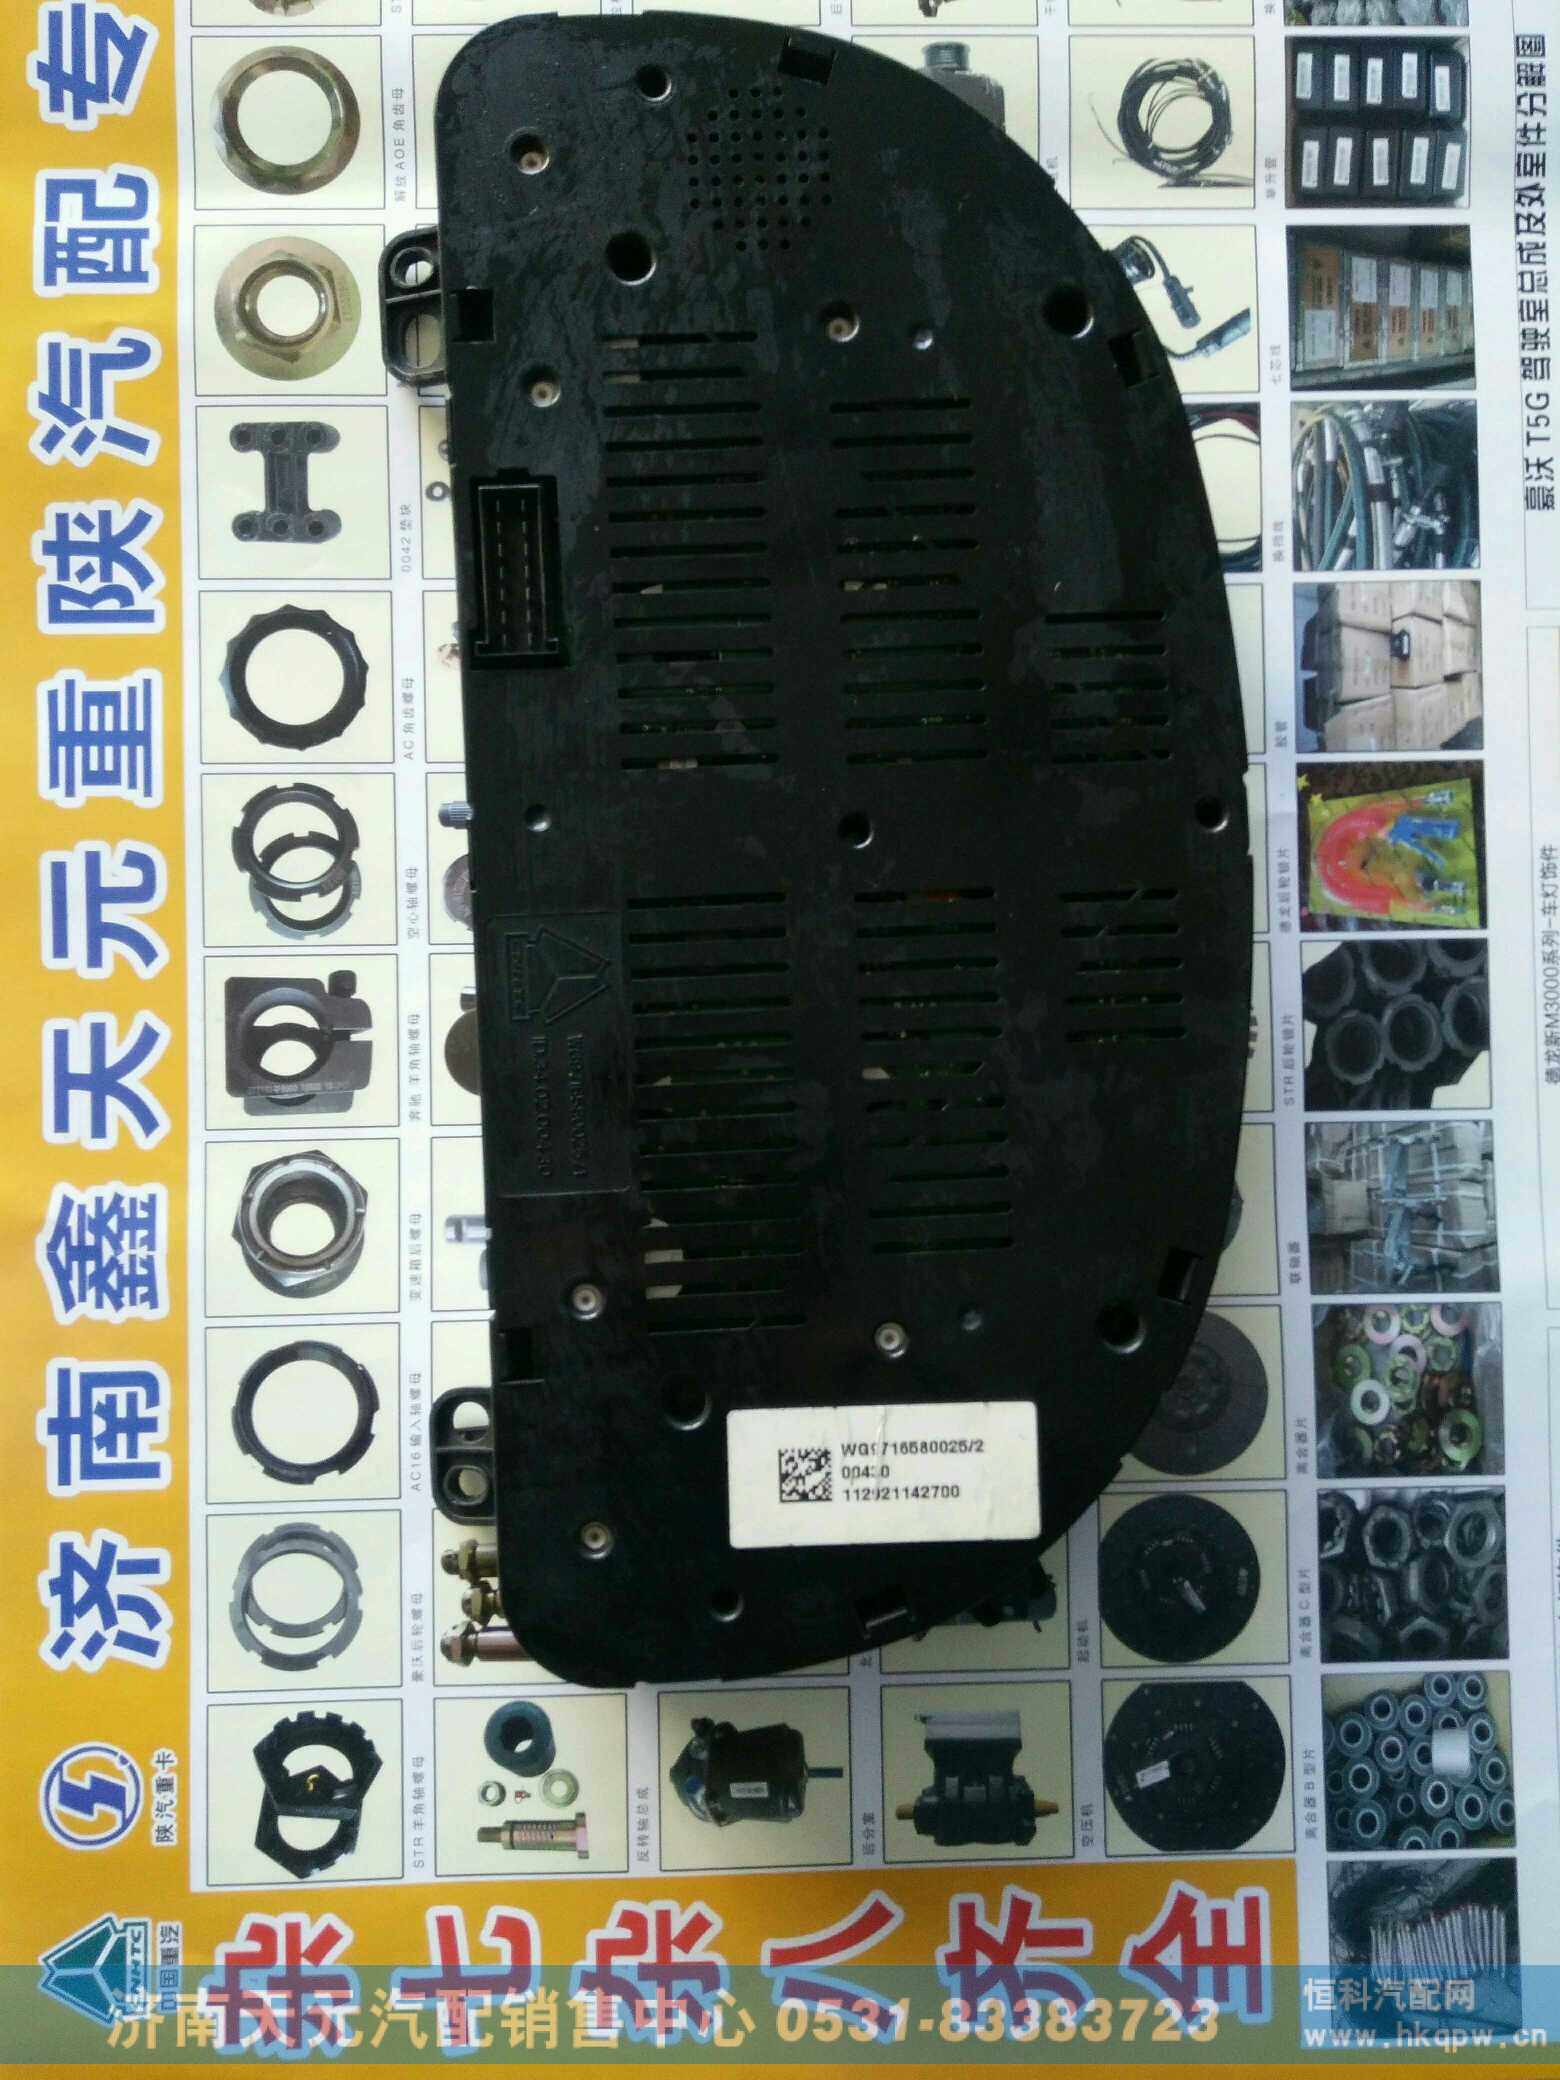 wG9716580025,仪表总成,济南天元汽配销售中心